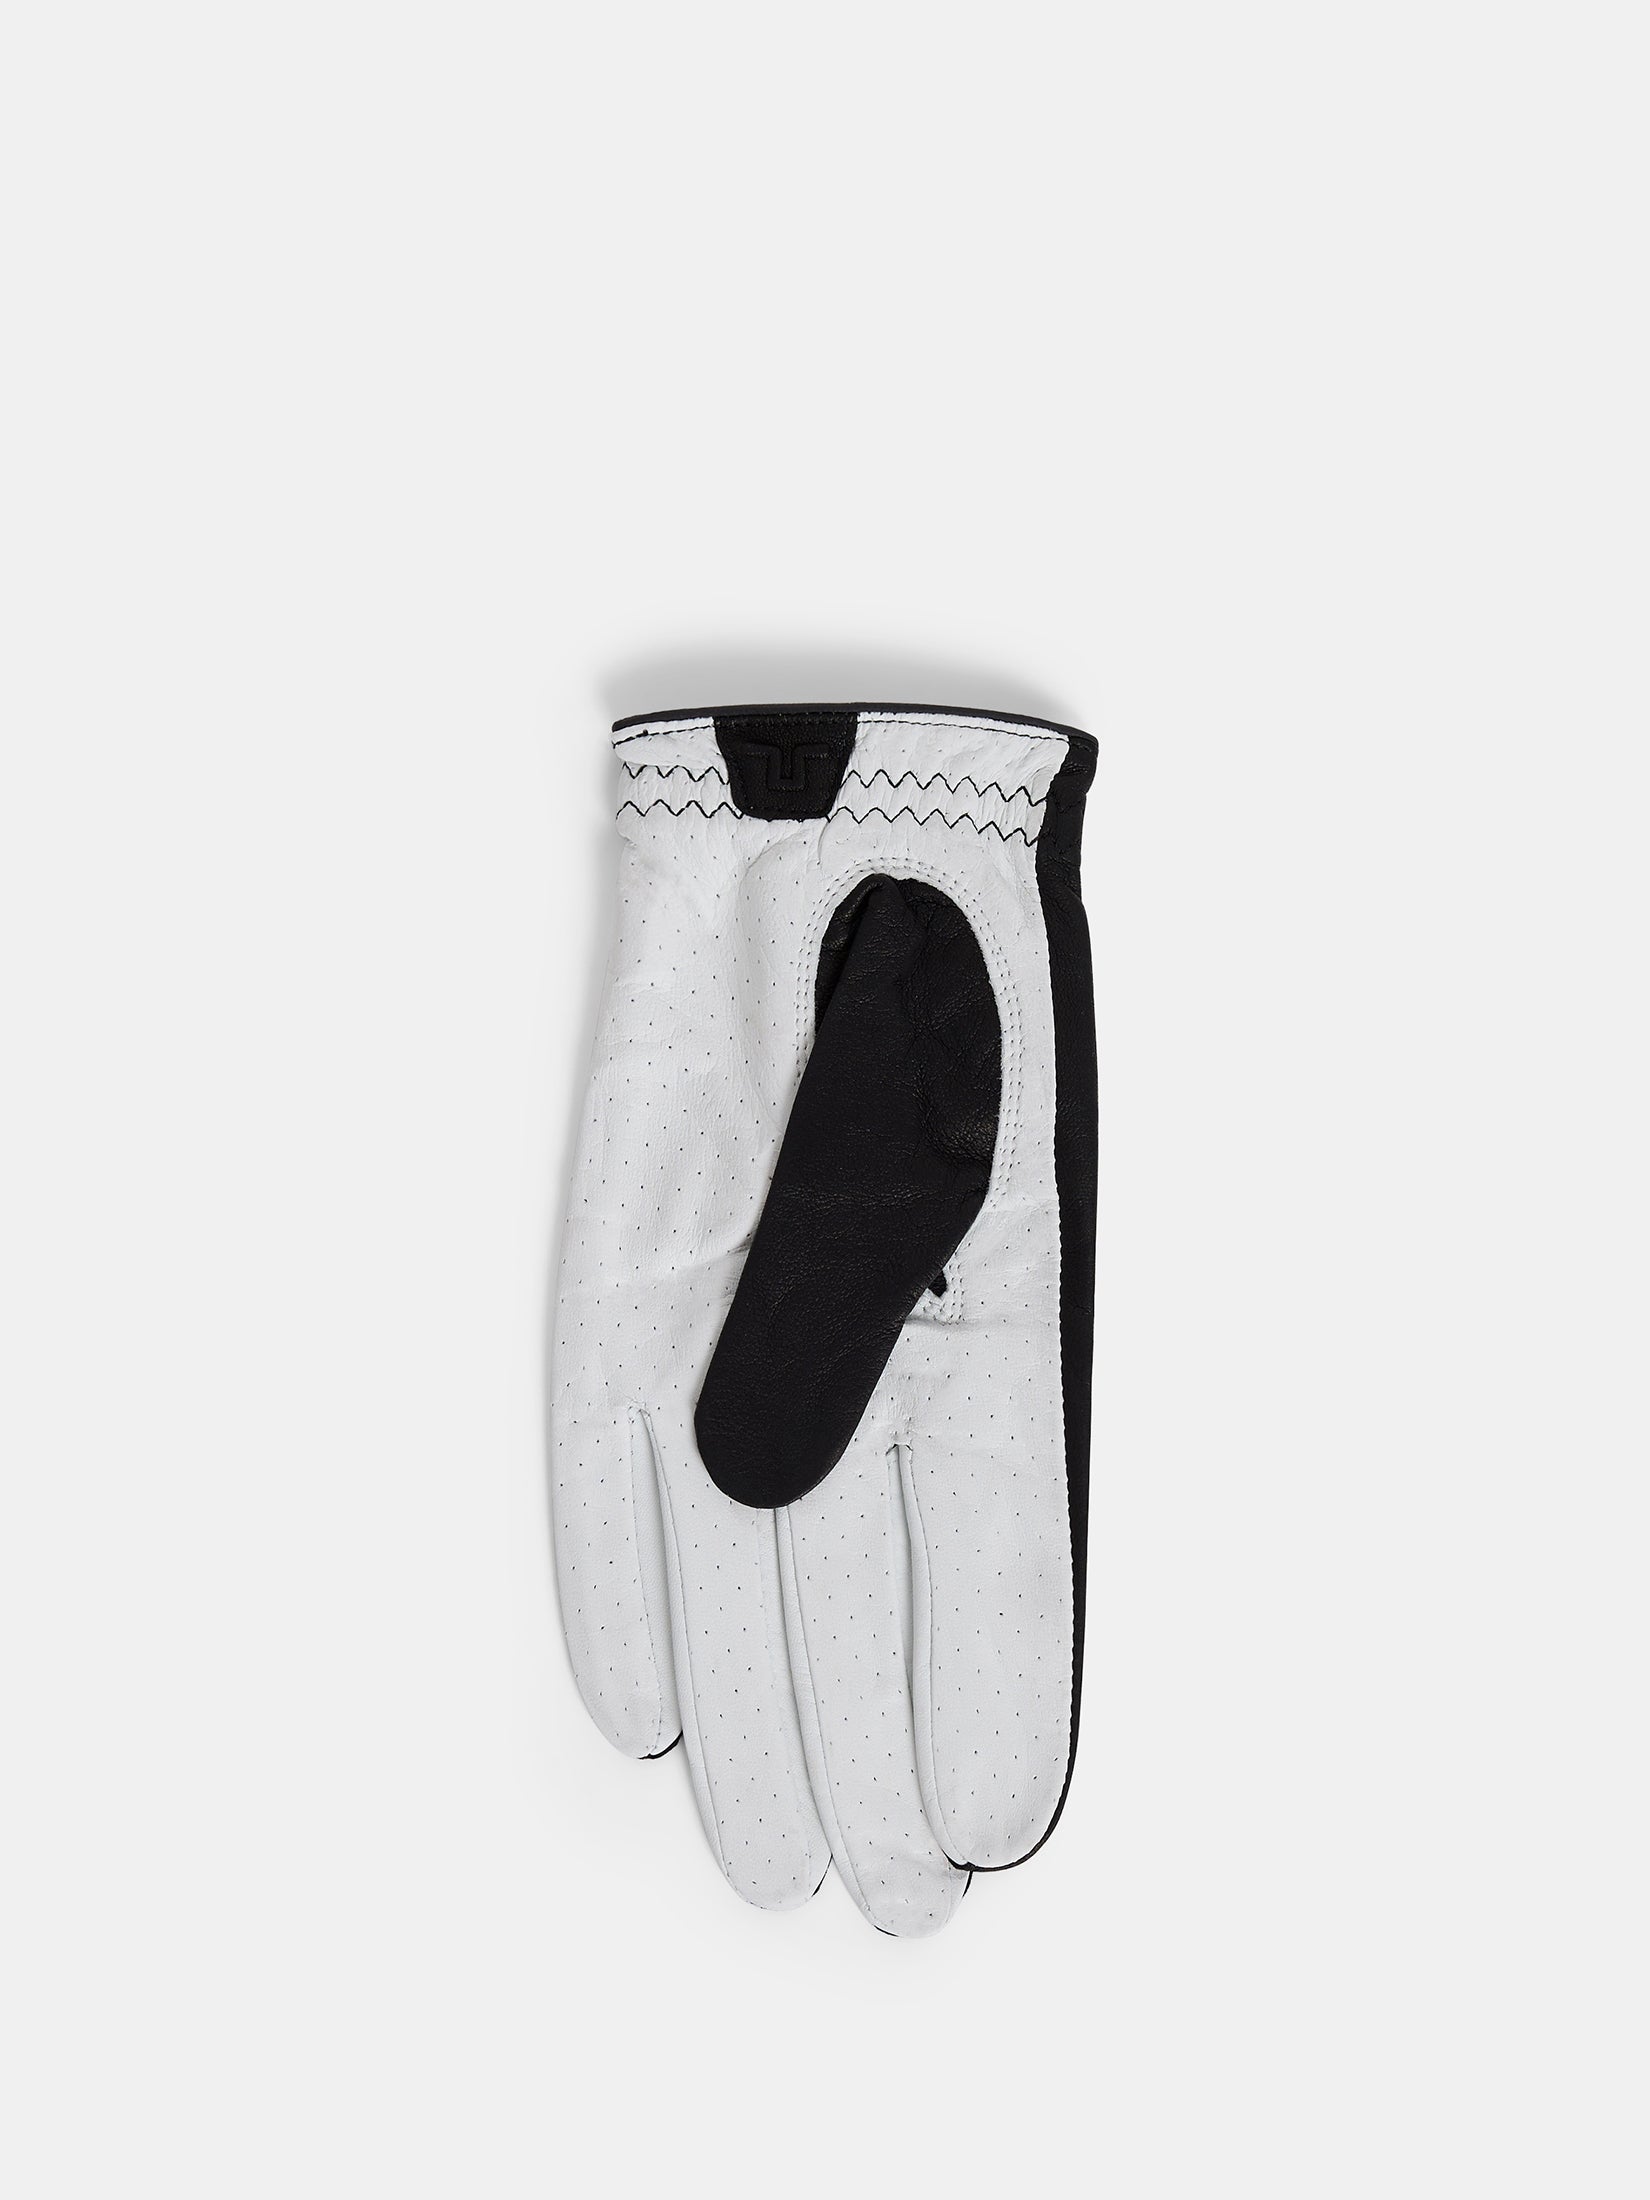 Ron Leather Golf Glove